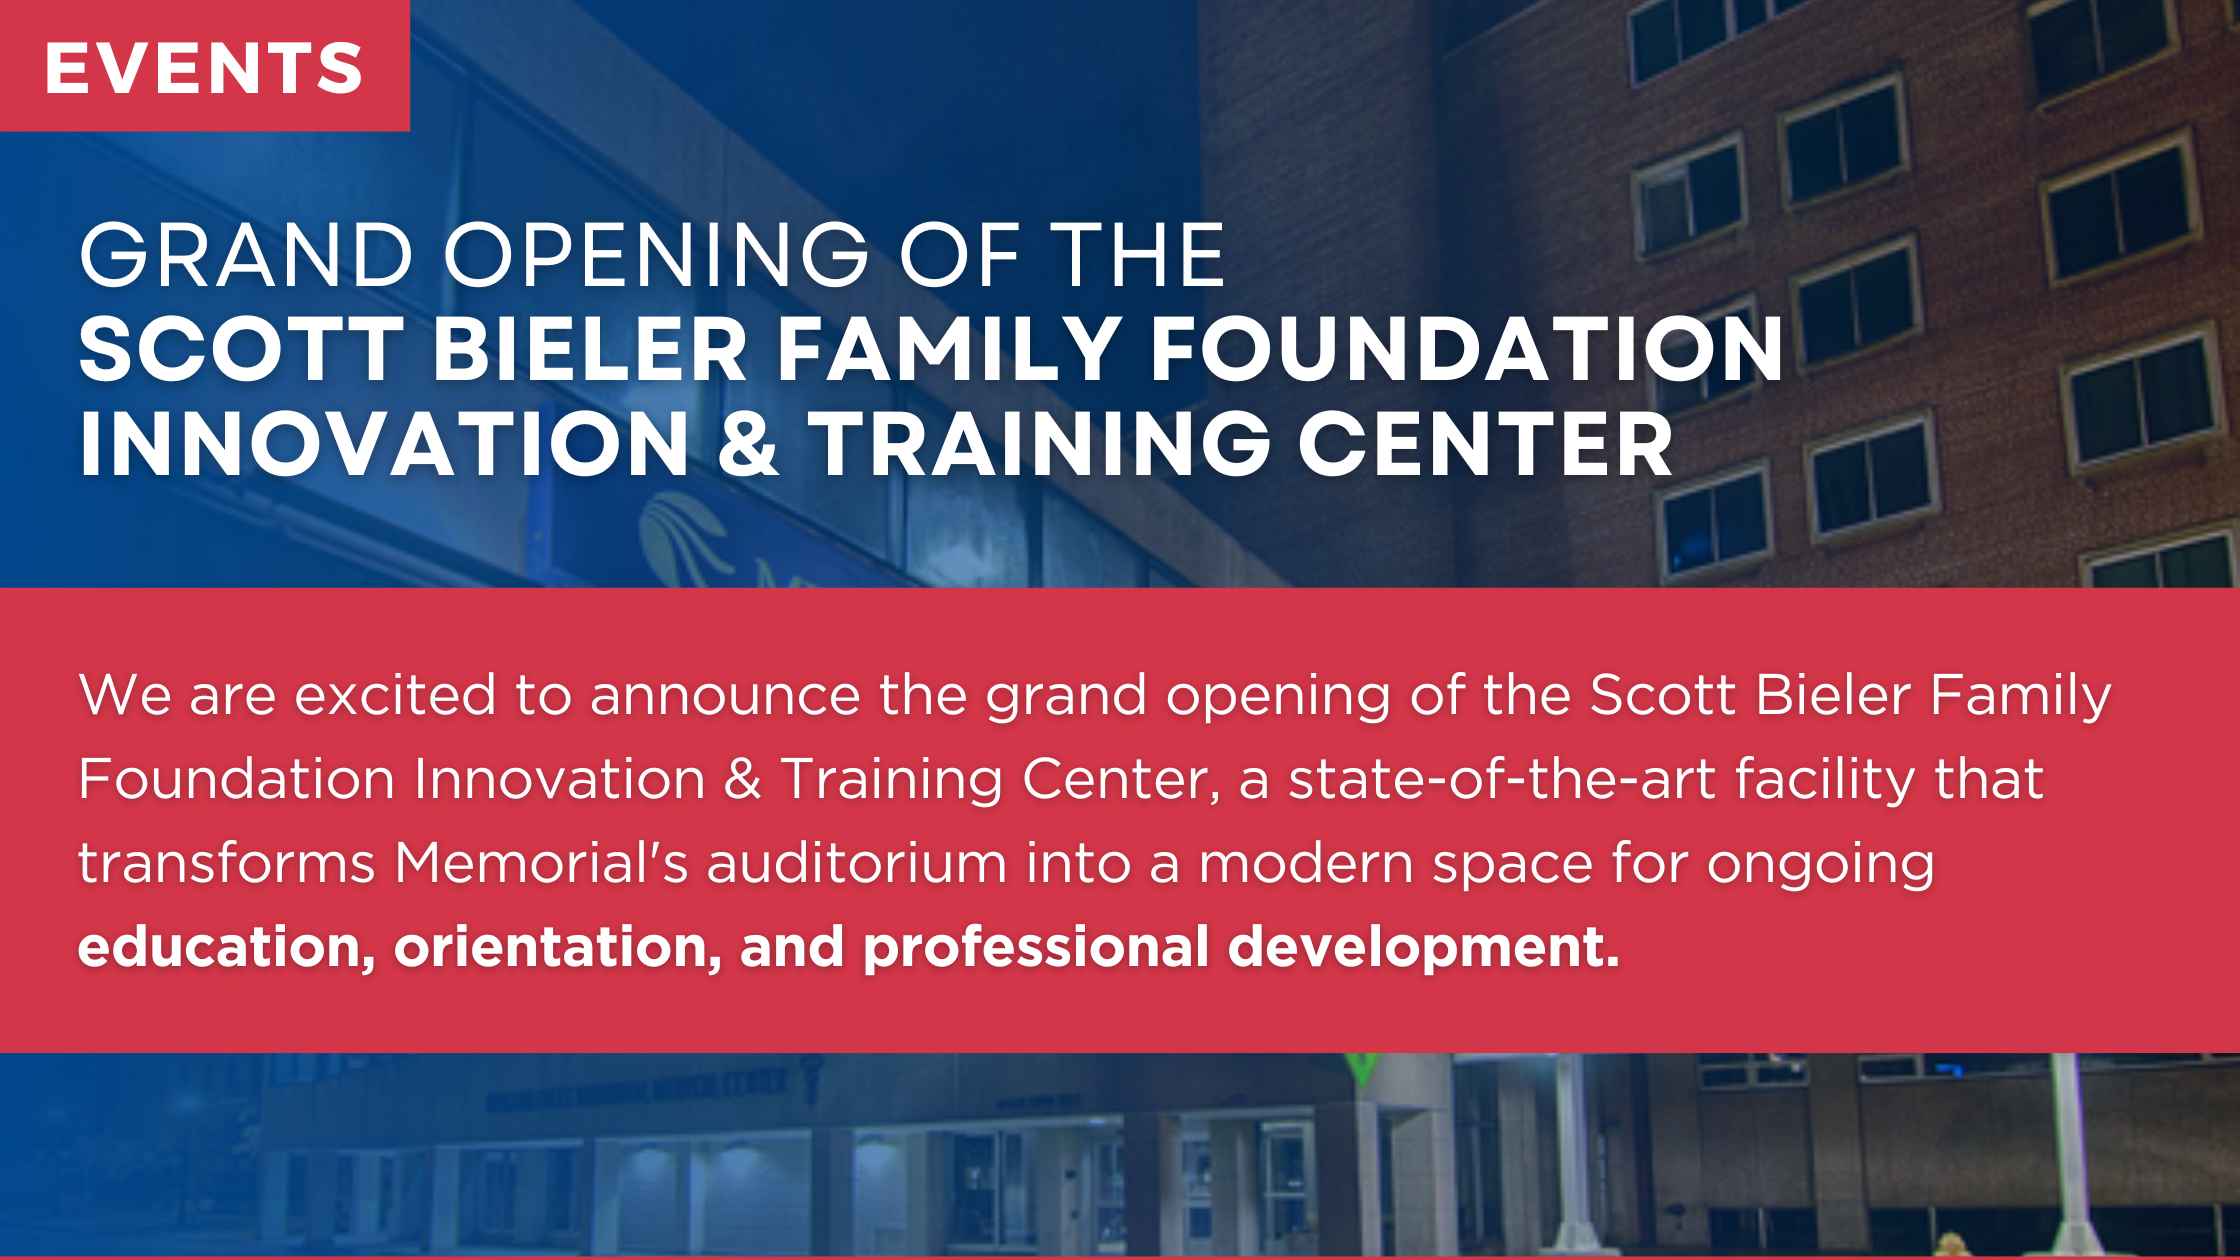 AUG 6, 10 AM: Niagara Falls Memorial Medical Center Hosts Grand Opening of the Scott Bieler Family Foundation Innovation & Training Center